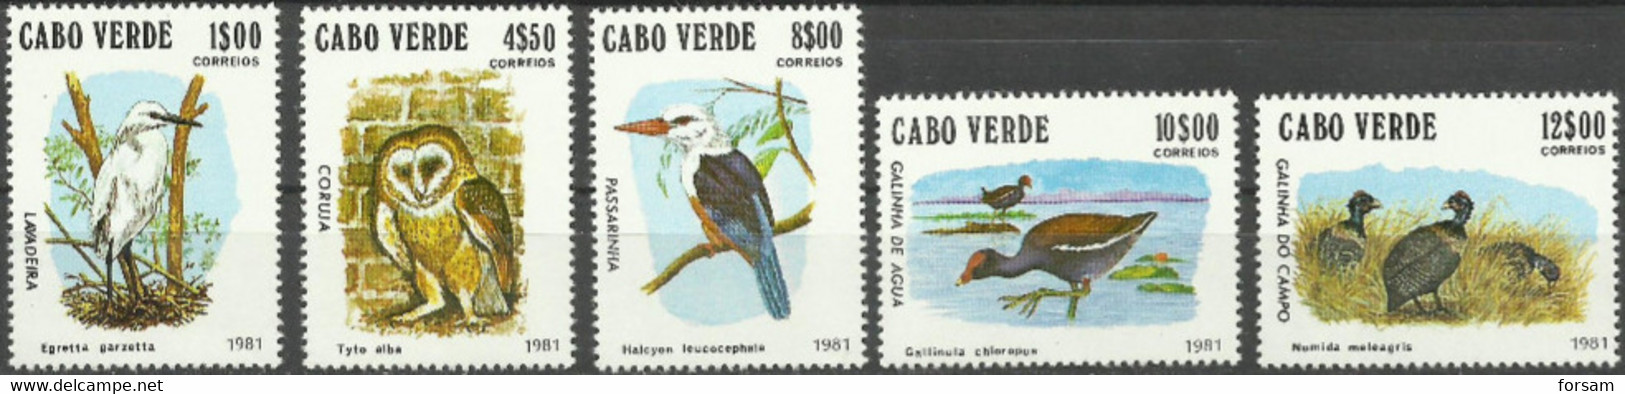 CAPE VERDE..1981..Michel # 445-449...MNH...MiCV - 12 Euro. - Kap Verde